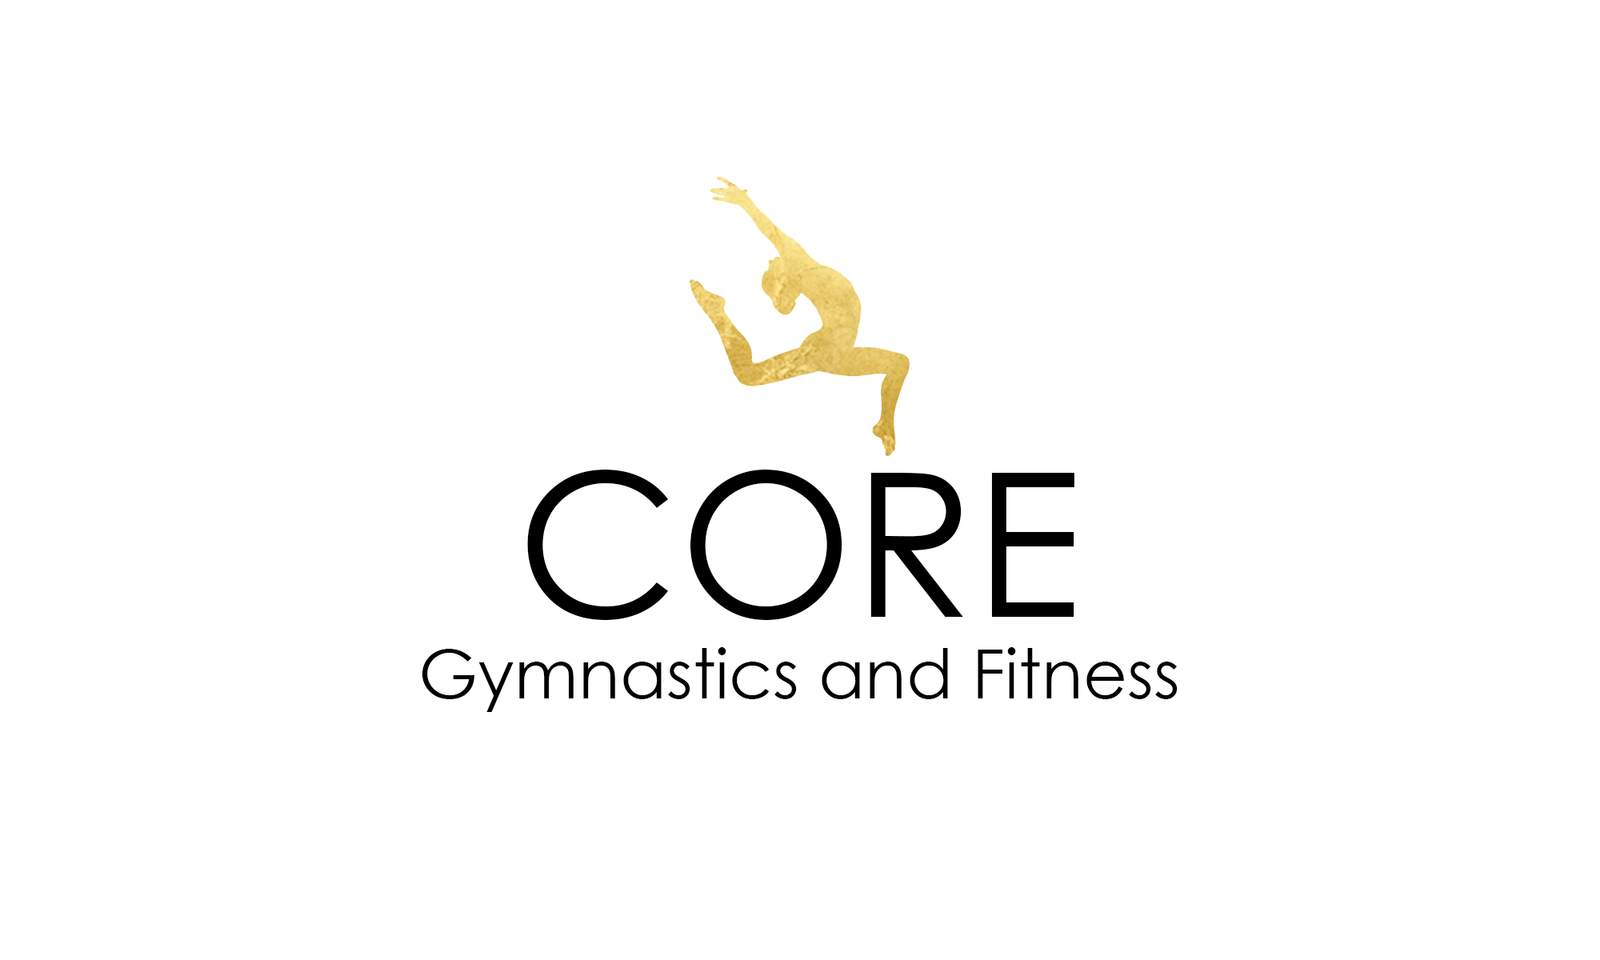 Core Gymnastics and Fitness